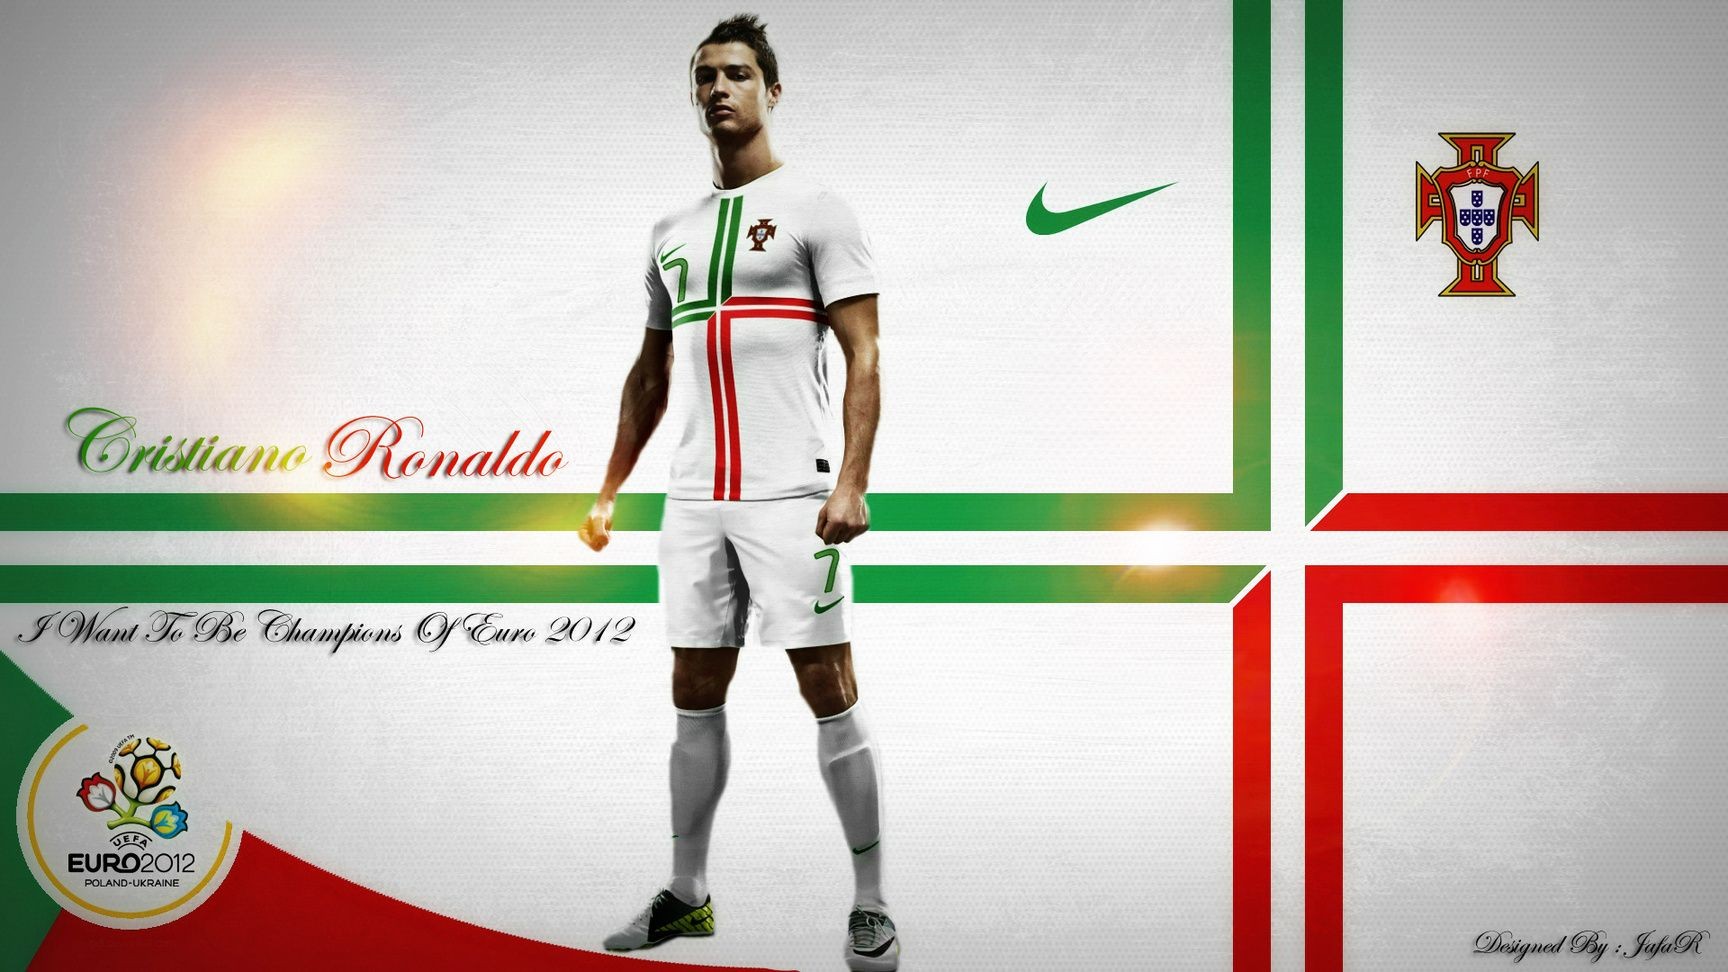 Cristiano Ronaldo Wallpaper, Best Soccer Player Ever, - Portugal Euro Wallpaper Ronaldo - HD Wallpaper 